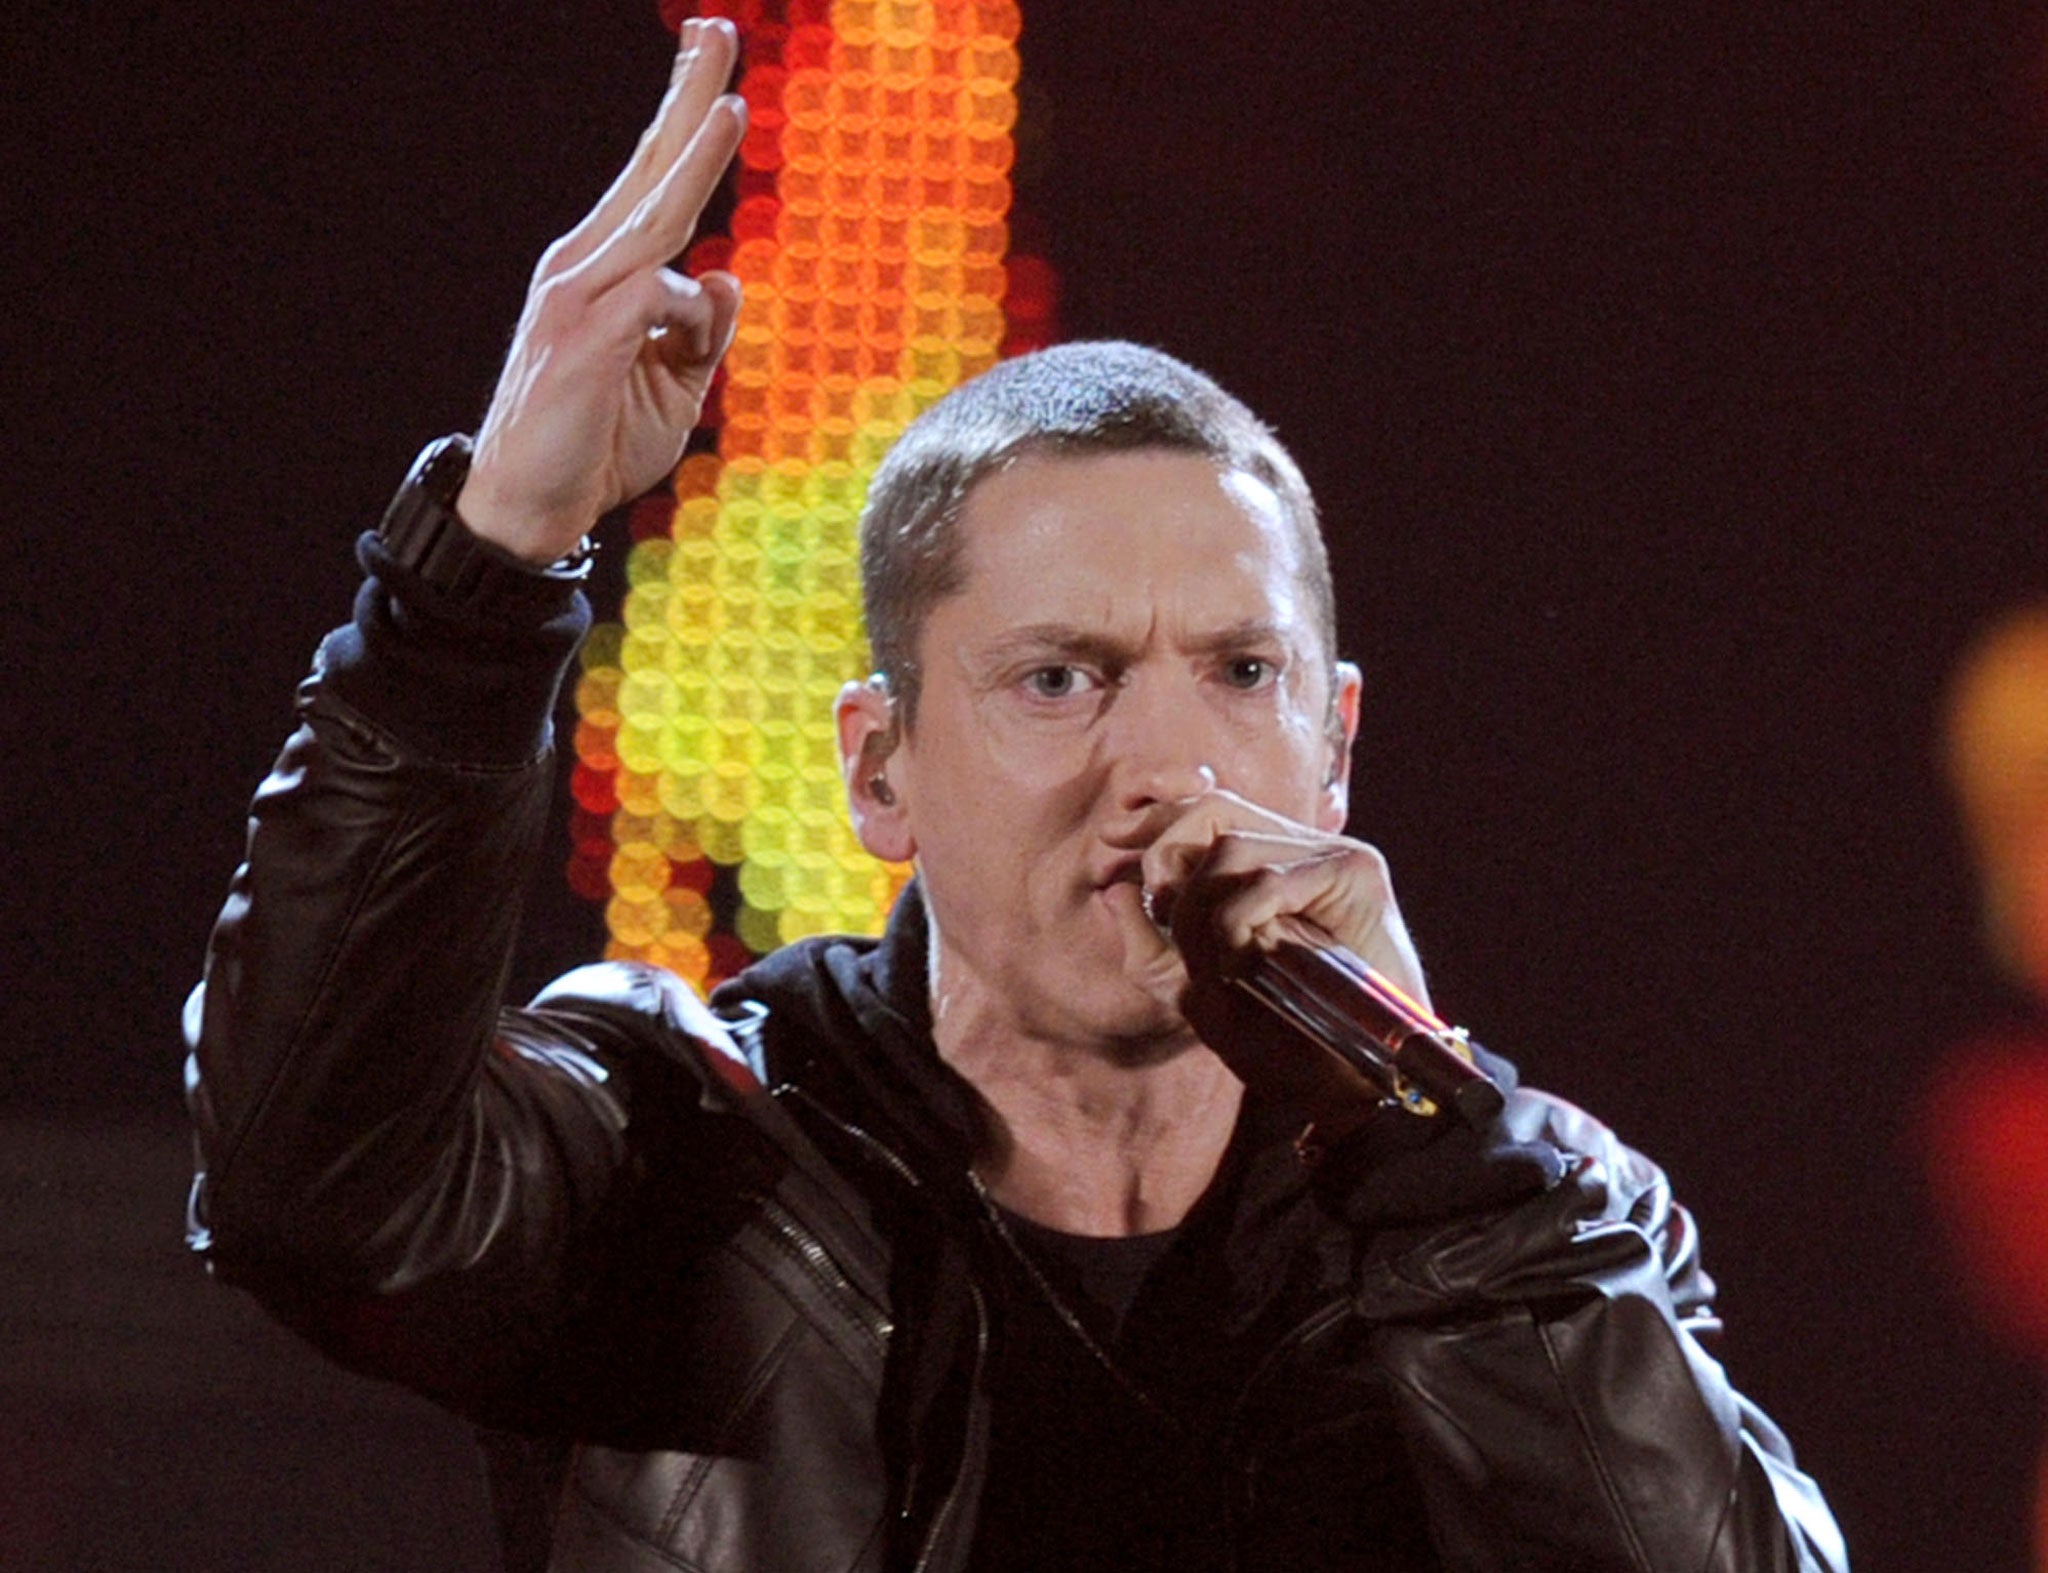 More than 50 Eminem fans were arrested at the rapper's concert in Ireland